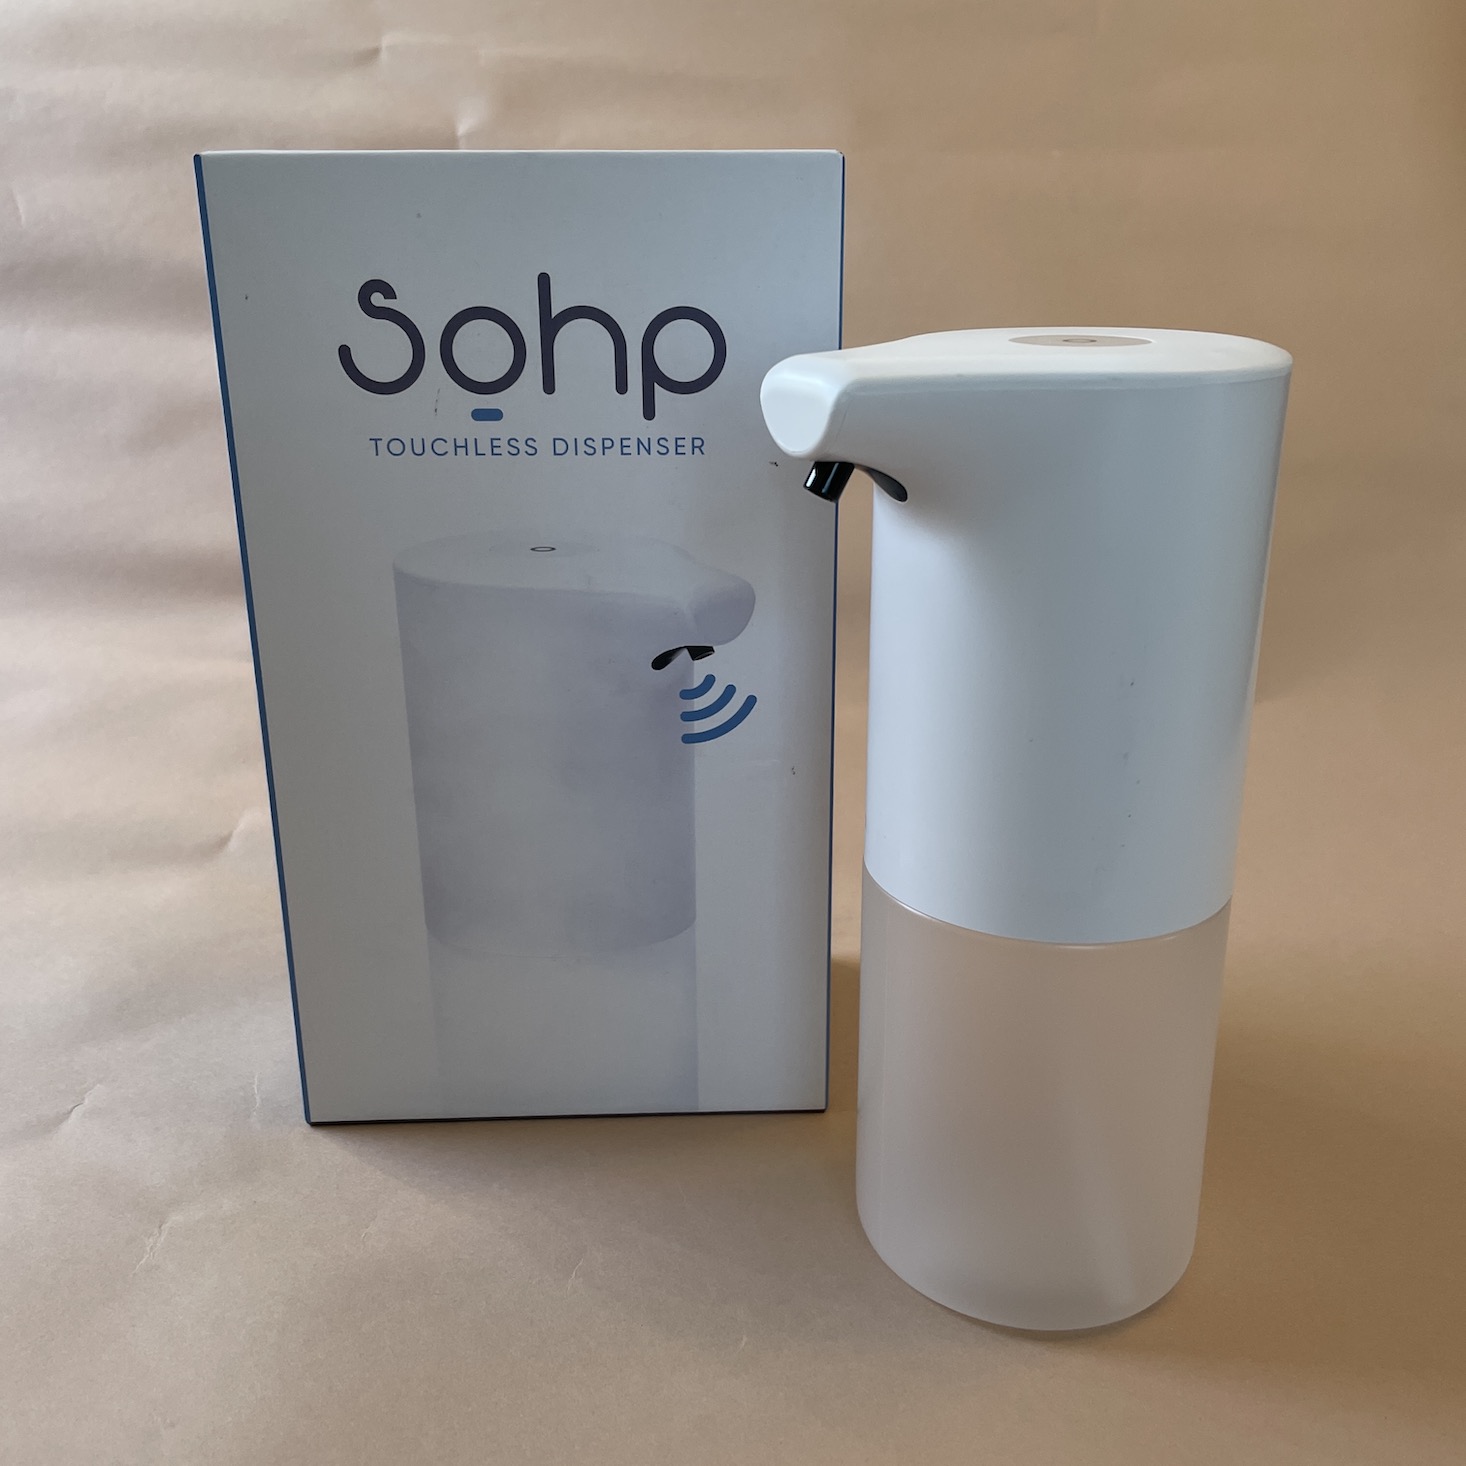 Sohp soap dispenser from BREO BOX Winter 2021